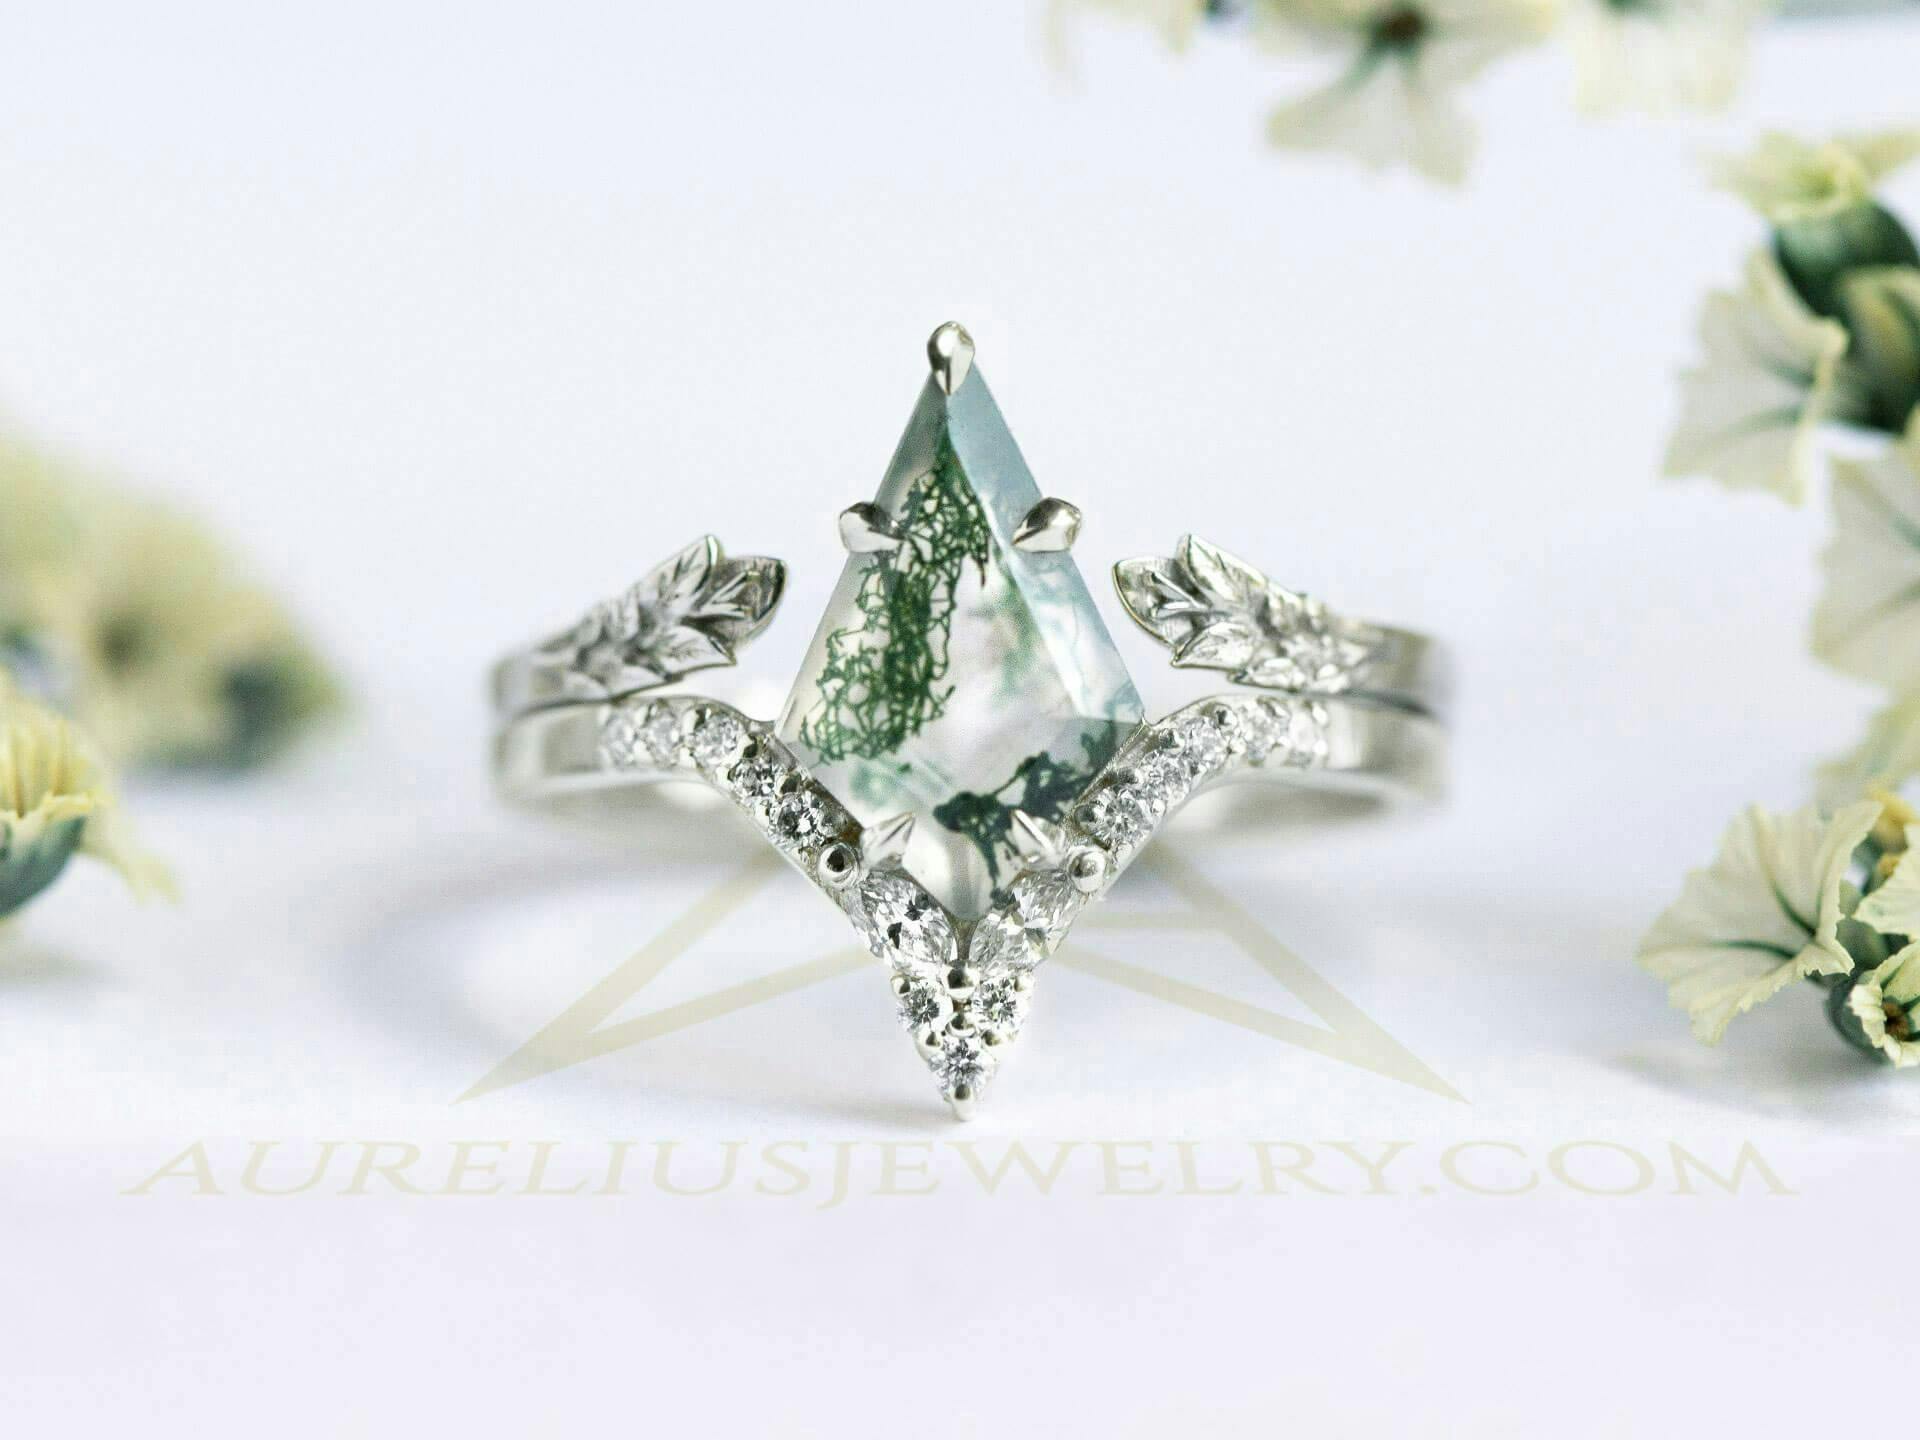 accessories jewelry ring diamond gemstone silver